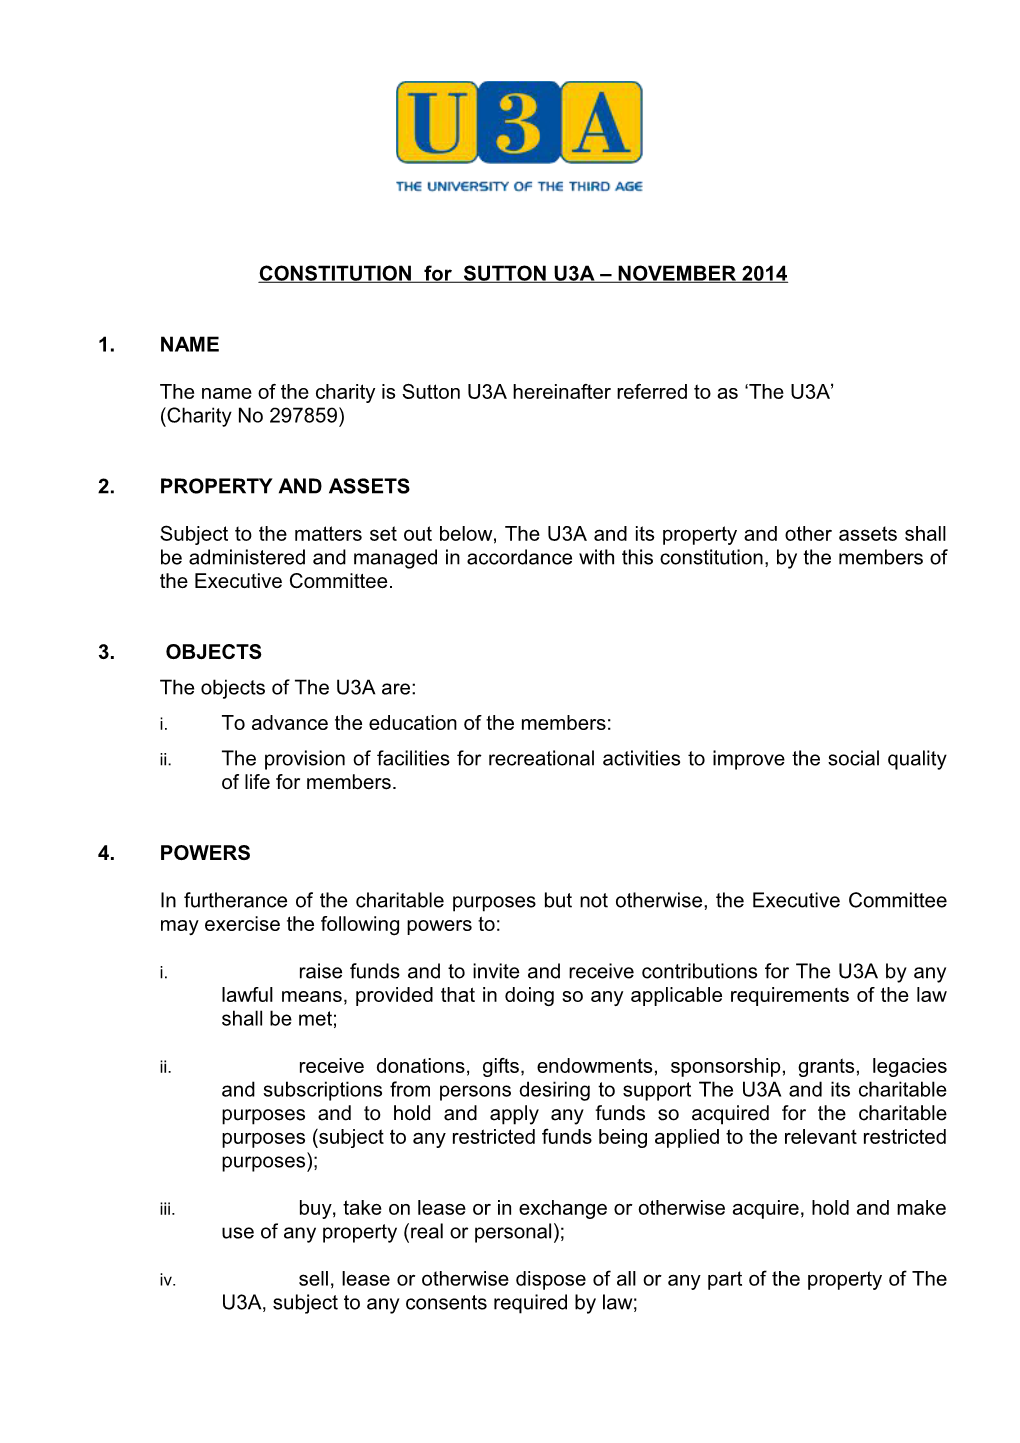 CONSTITUTION for SUTTON U3A NOVEMBER 2014